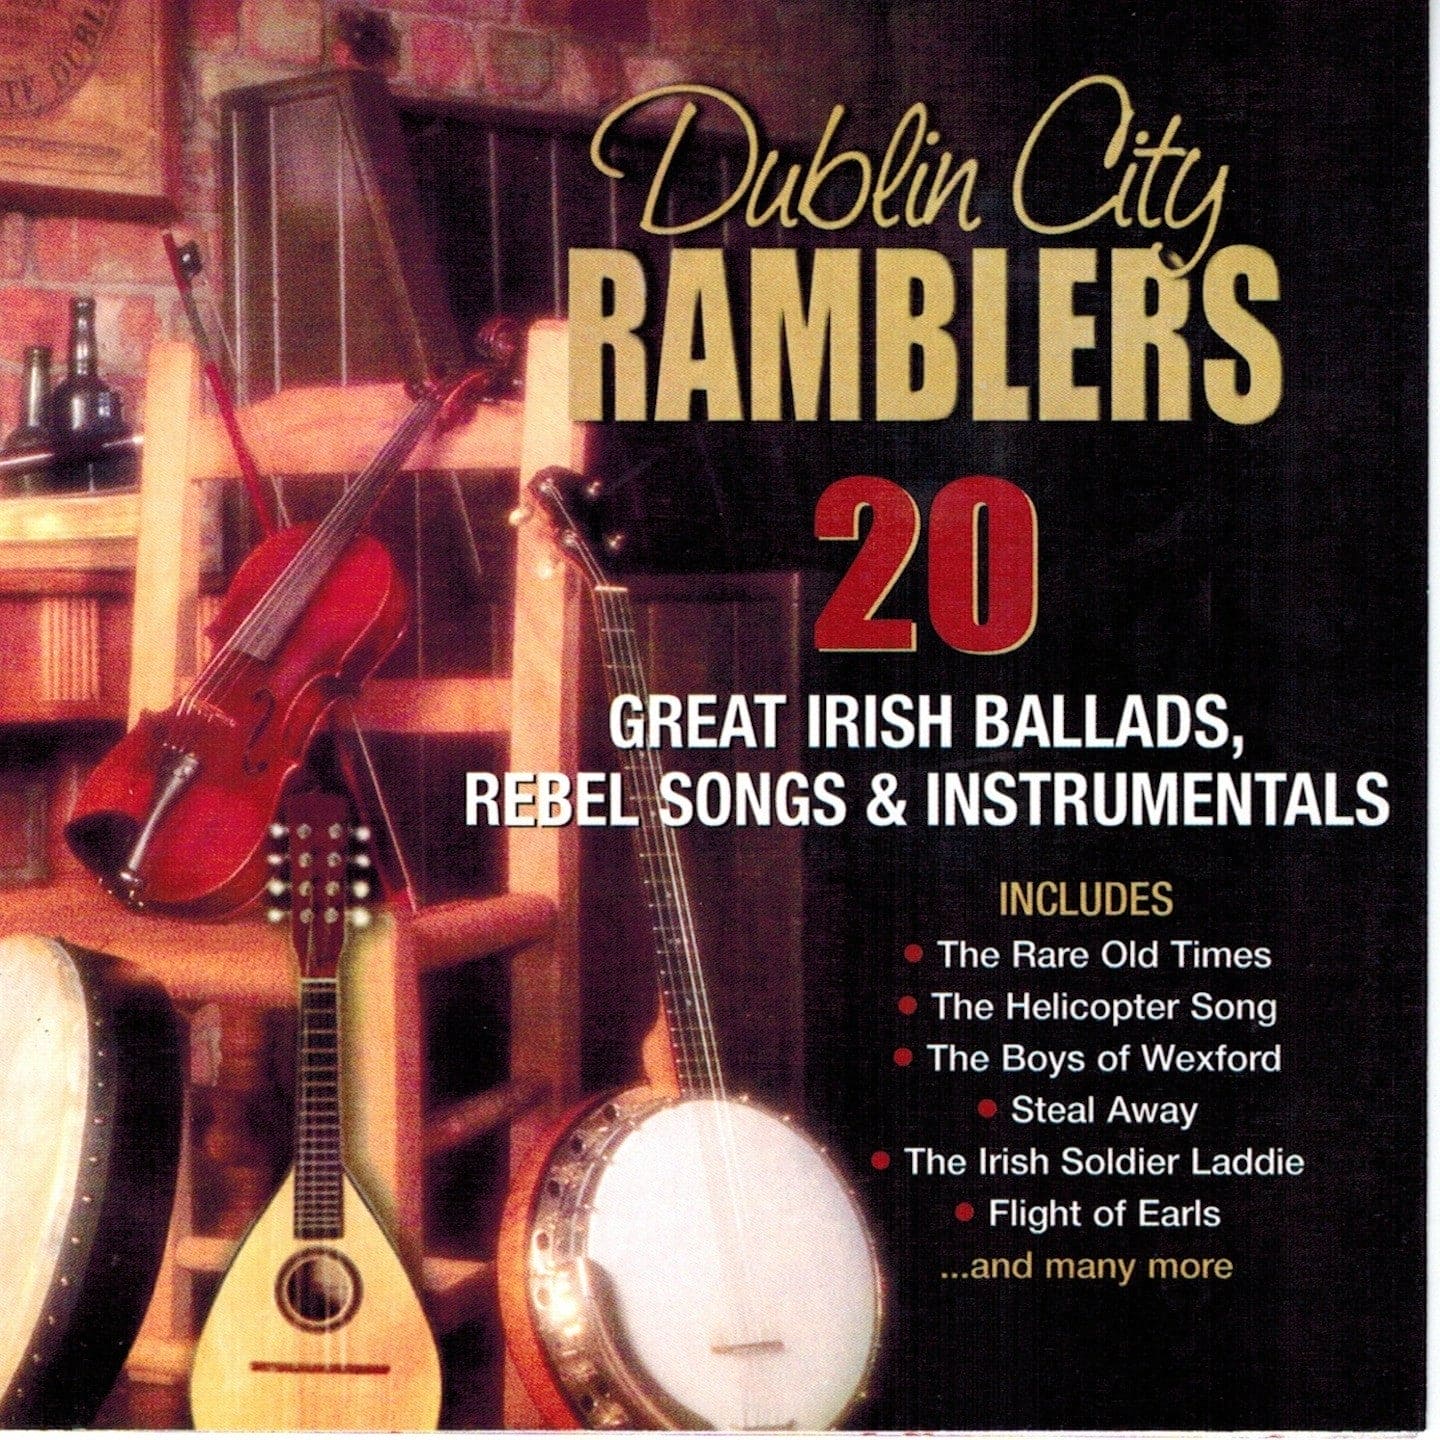 20 Great Irish Ballads, Rebel Songs & Instrumentals - The Dublin City Ramblers [CD]